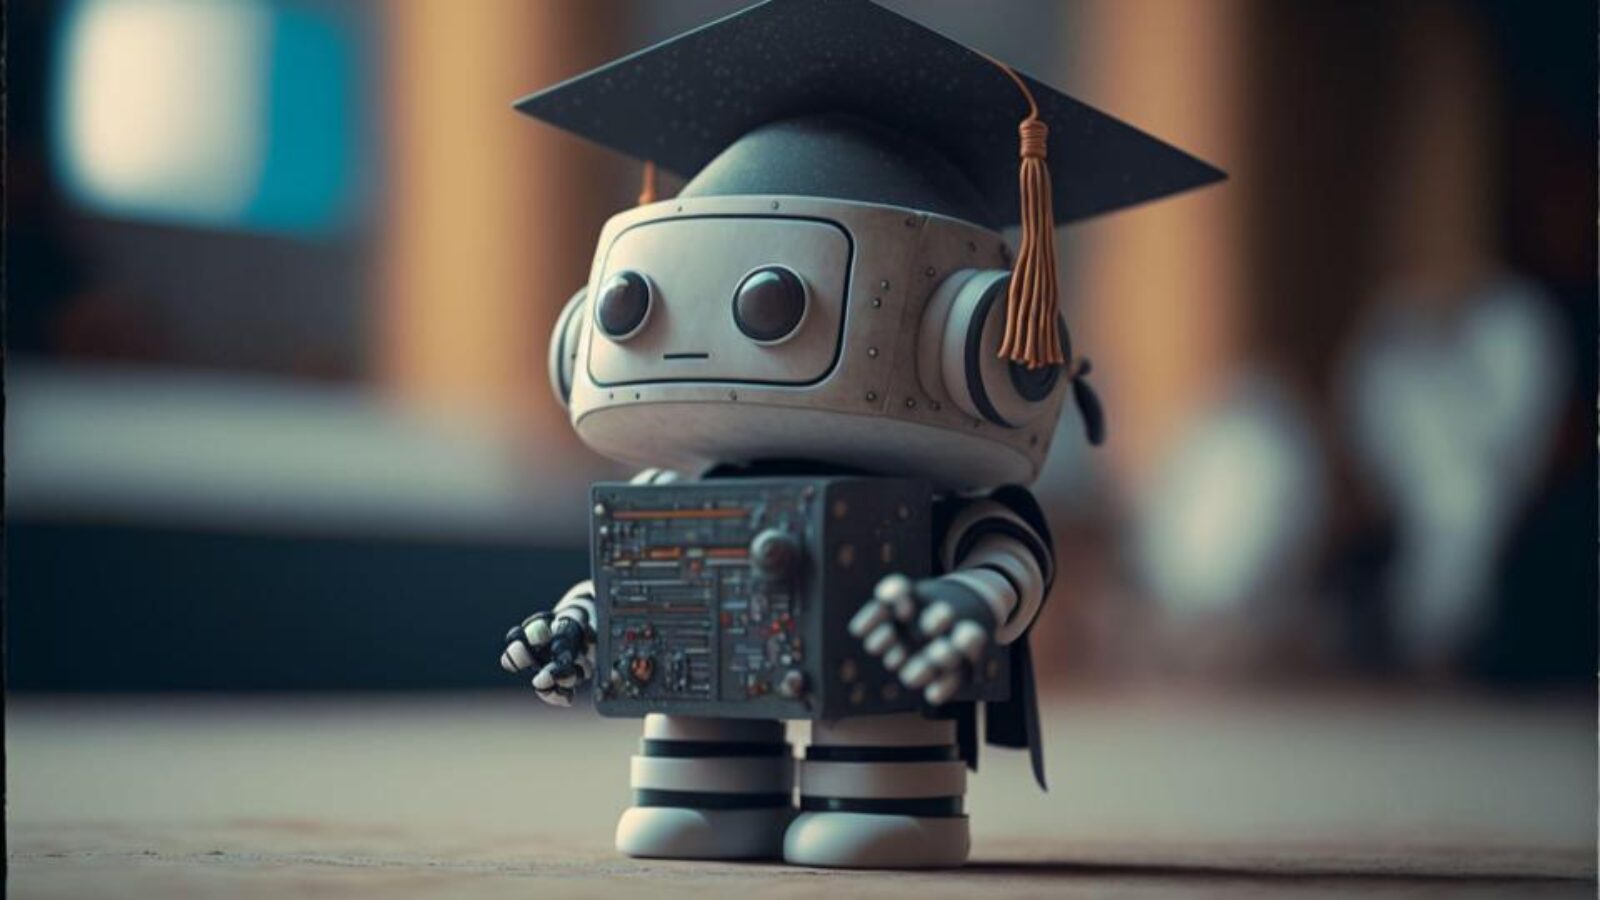 Cute toddler-looking robot wearing a graduation cap